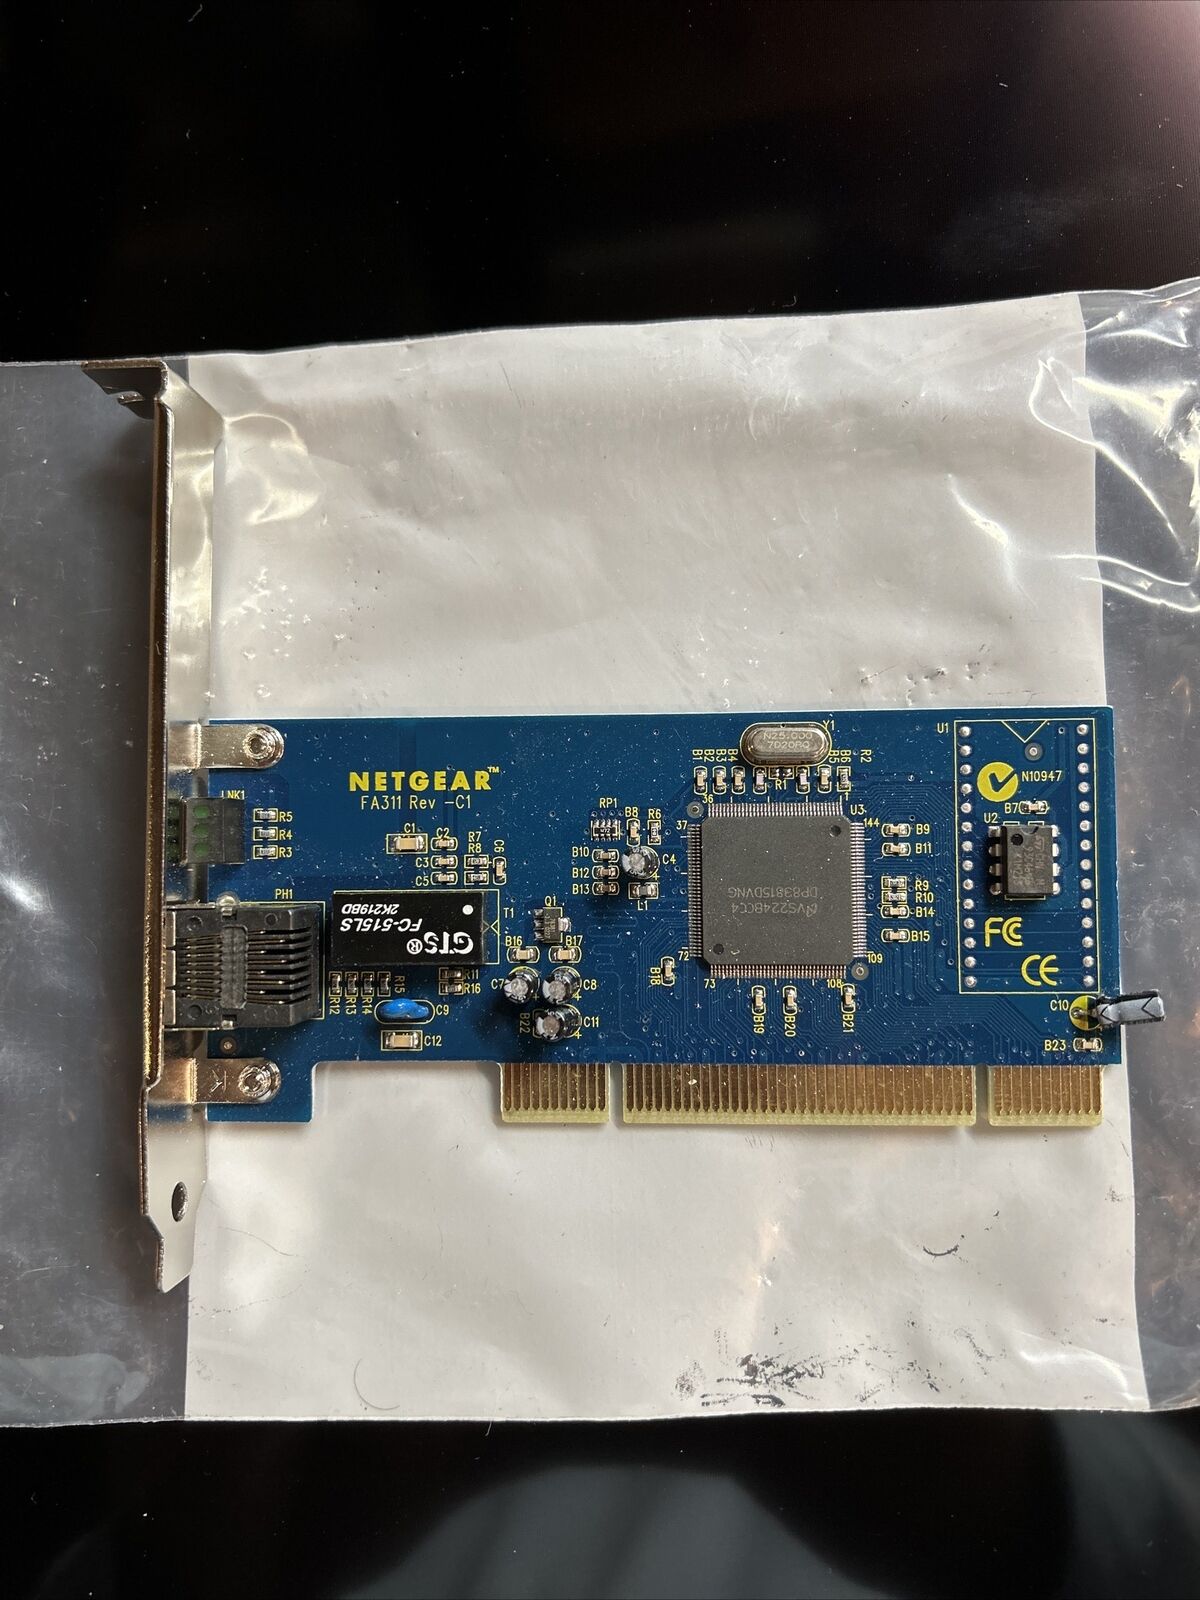 Netgear FA311 10/100Mbps Fast Ethernet RJ45 PCI Network Card Windows 95/98/ME